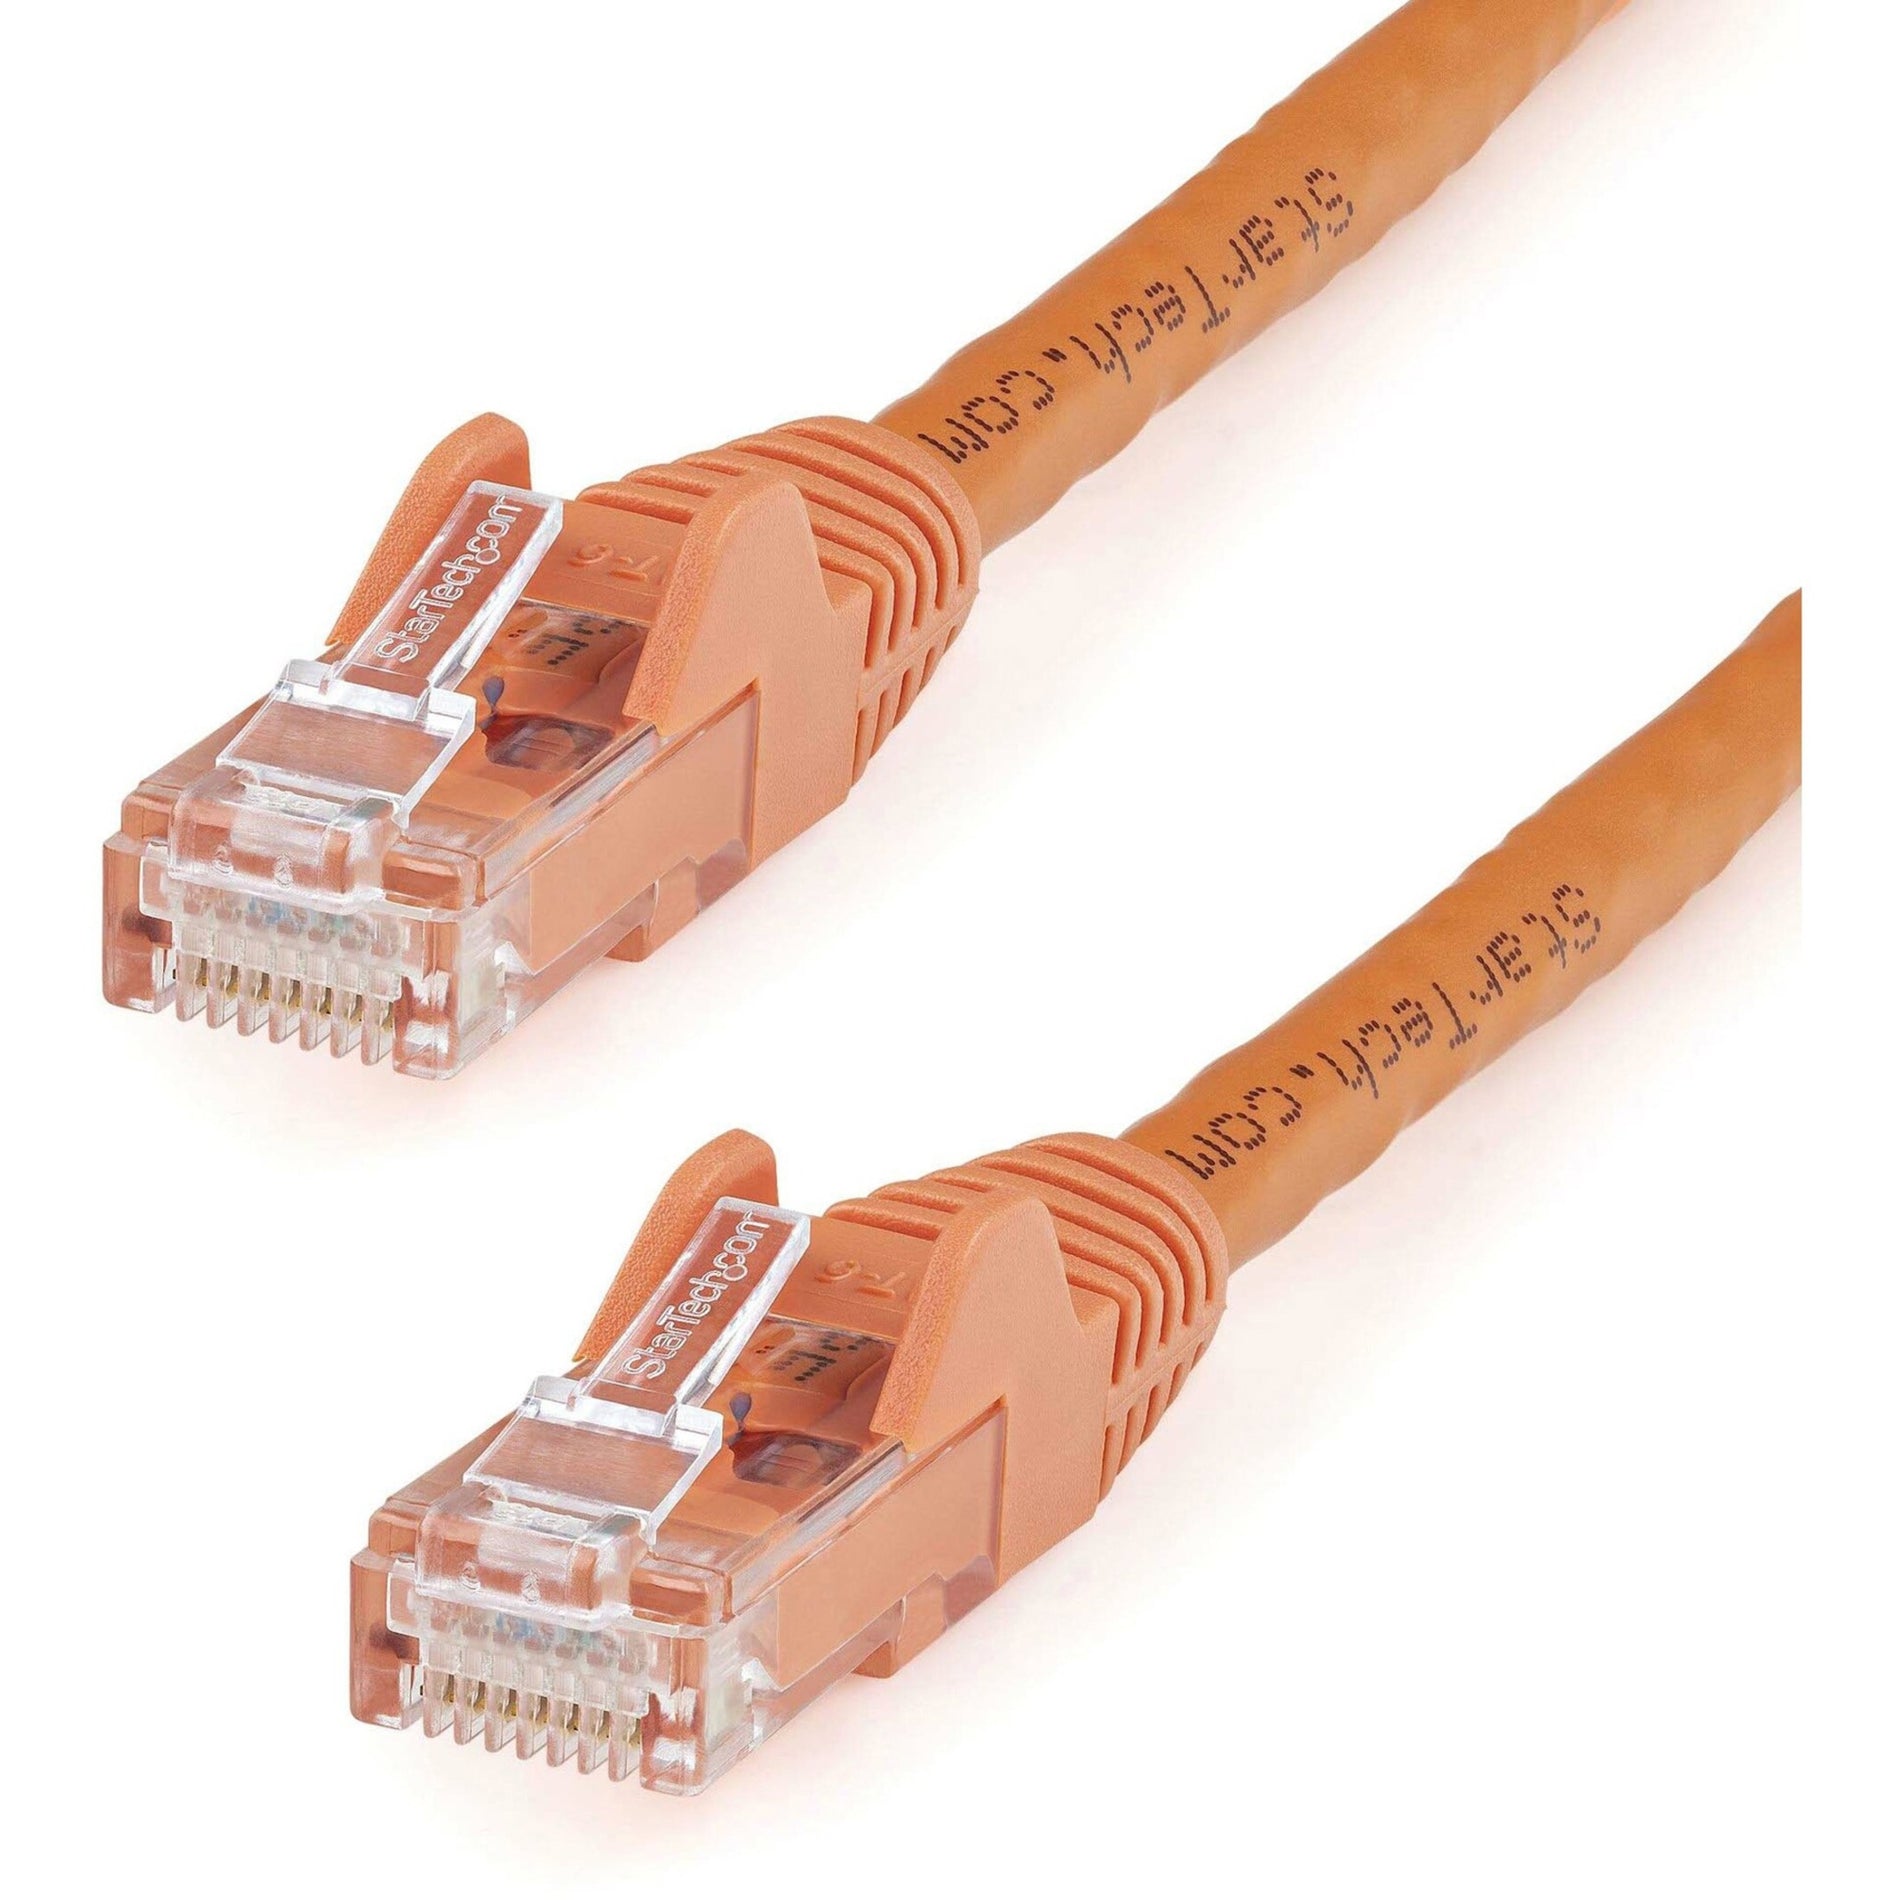 StarTech.com N6PATCH50OR 50 ft Orange Snagless Cat6 UTP Patch Cable - ETL Verified, Lifetime Warranty, 10 Gbit/s Data Transfer Rate